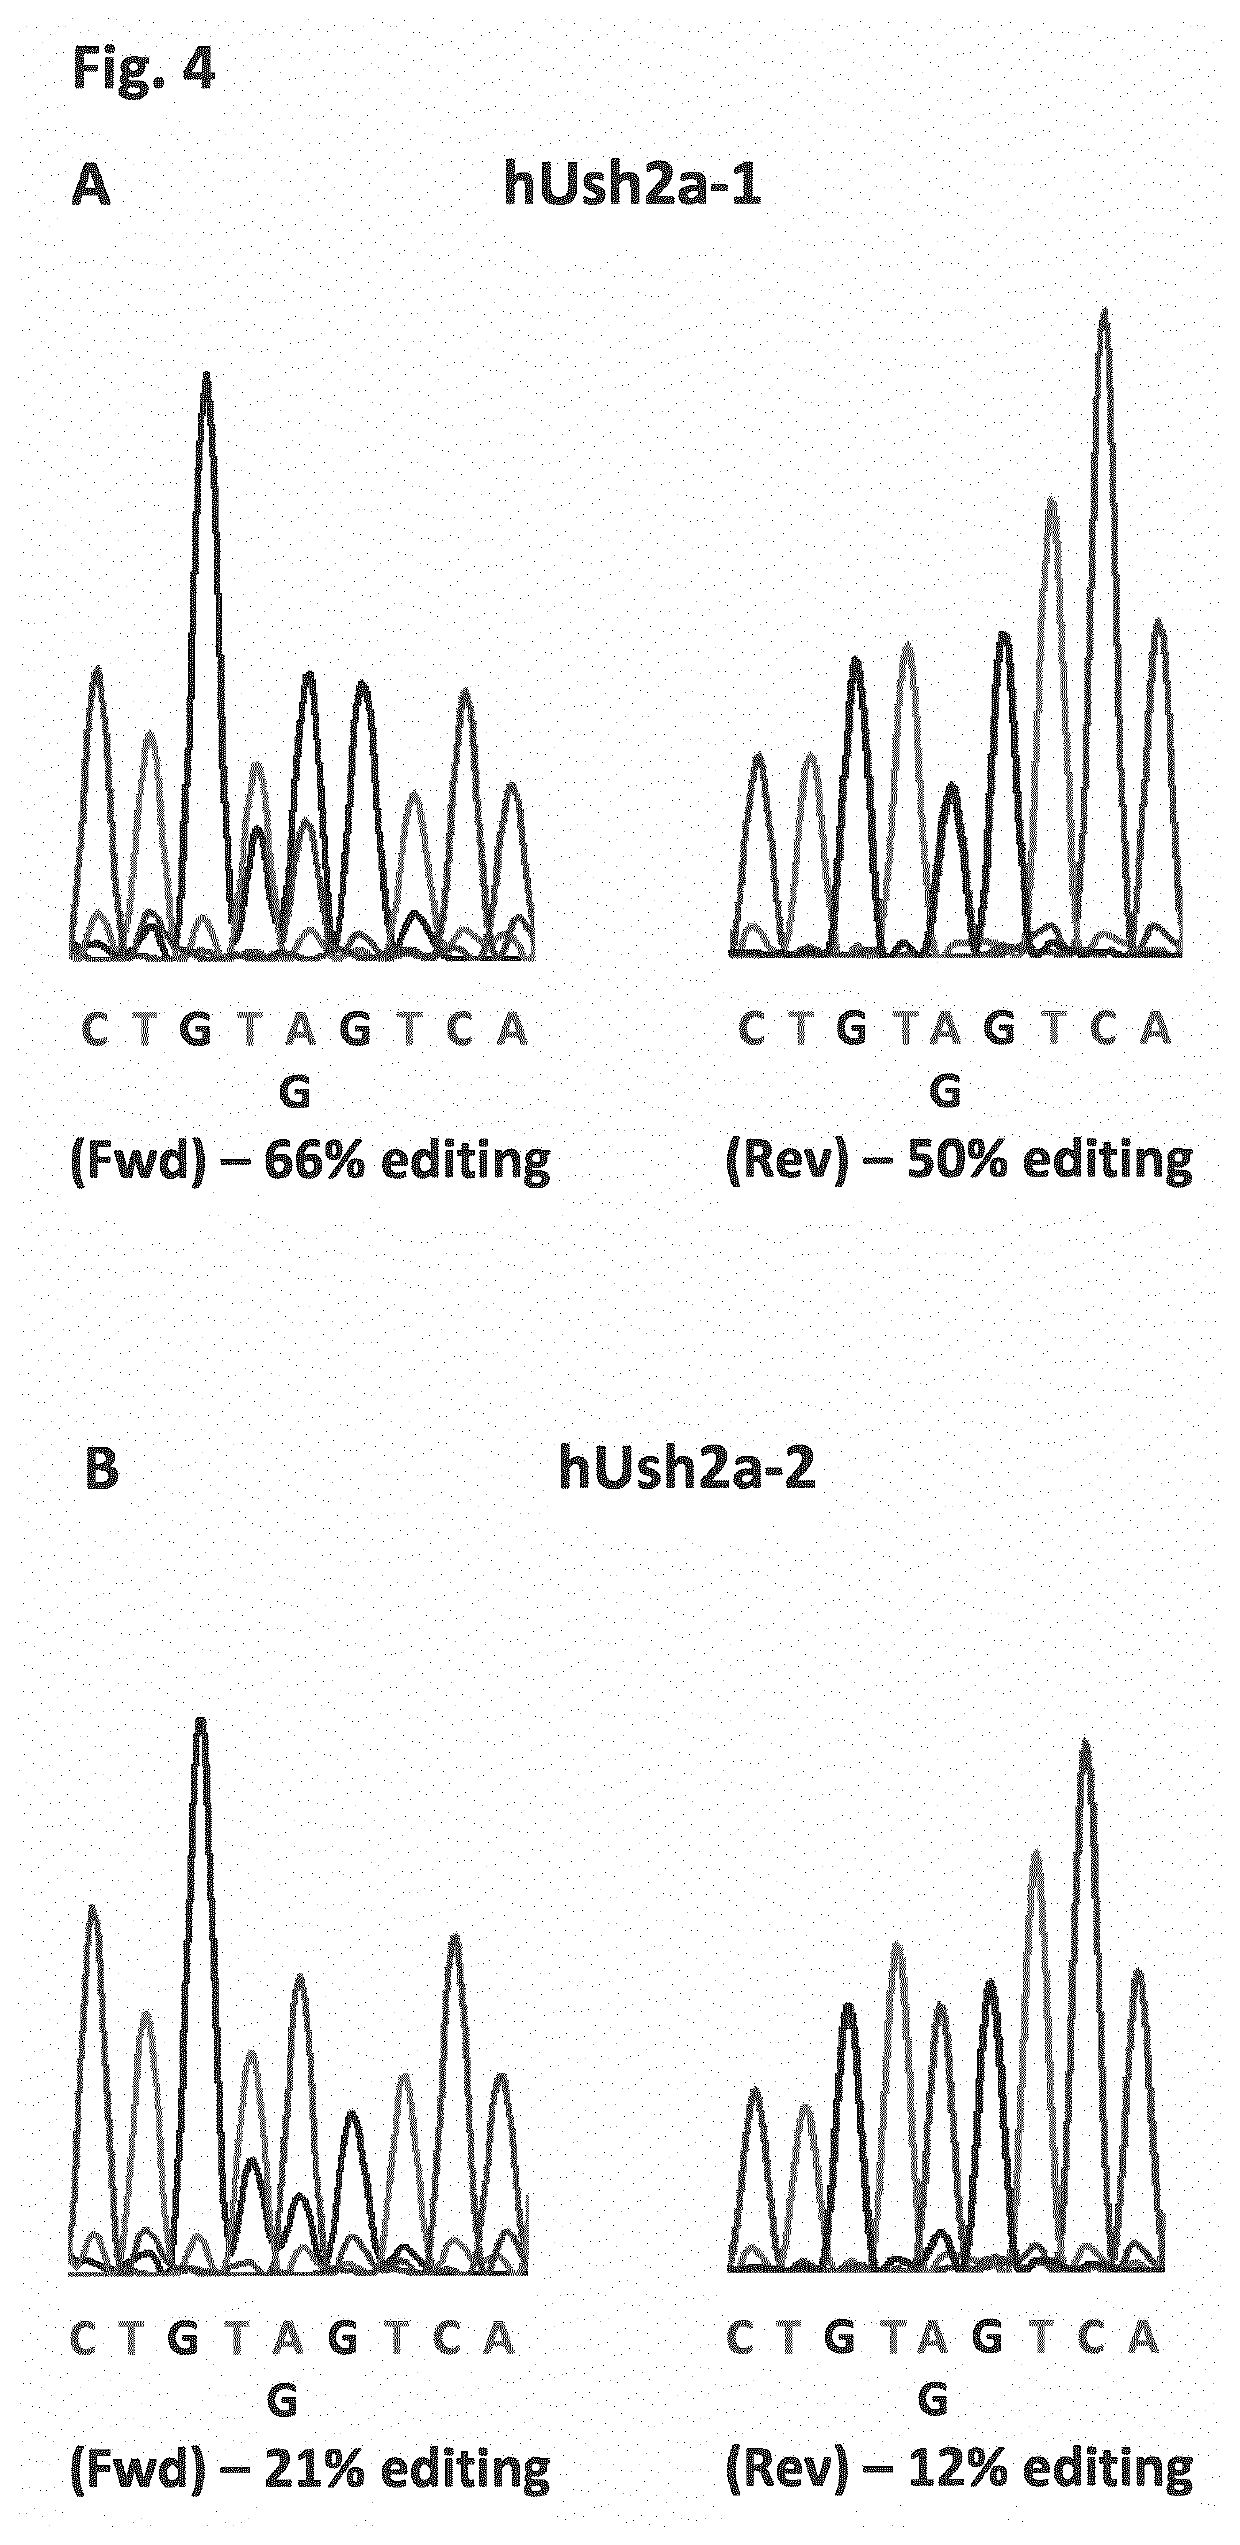 Rna-editing oligonucleotides for the treatment of usher syndrome